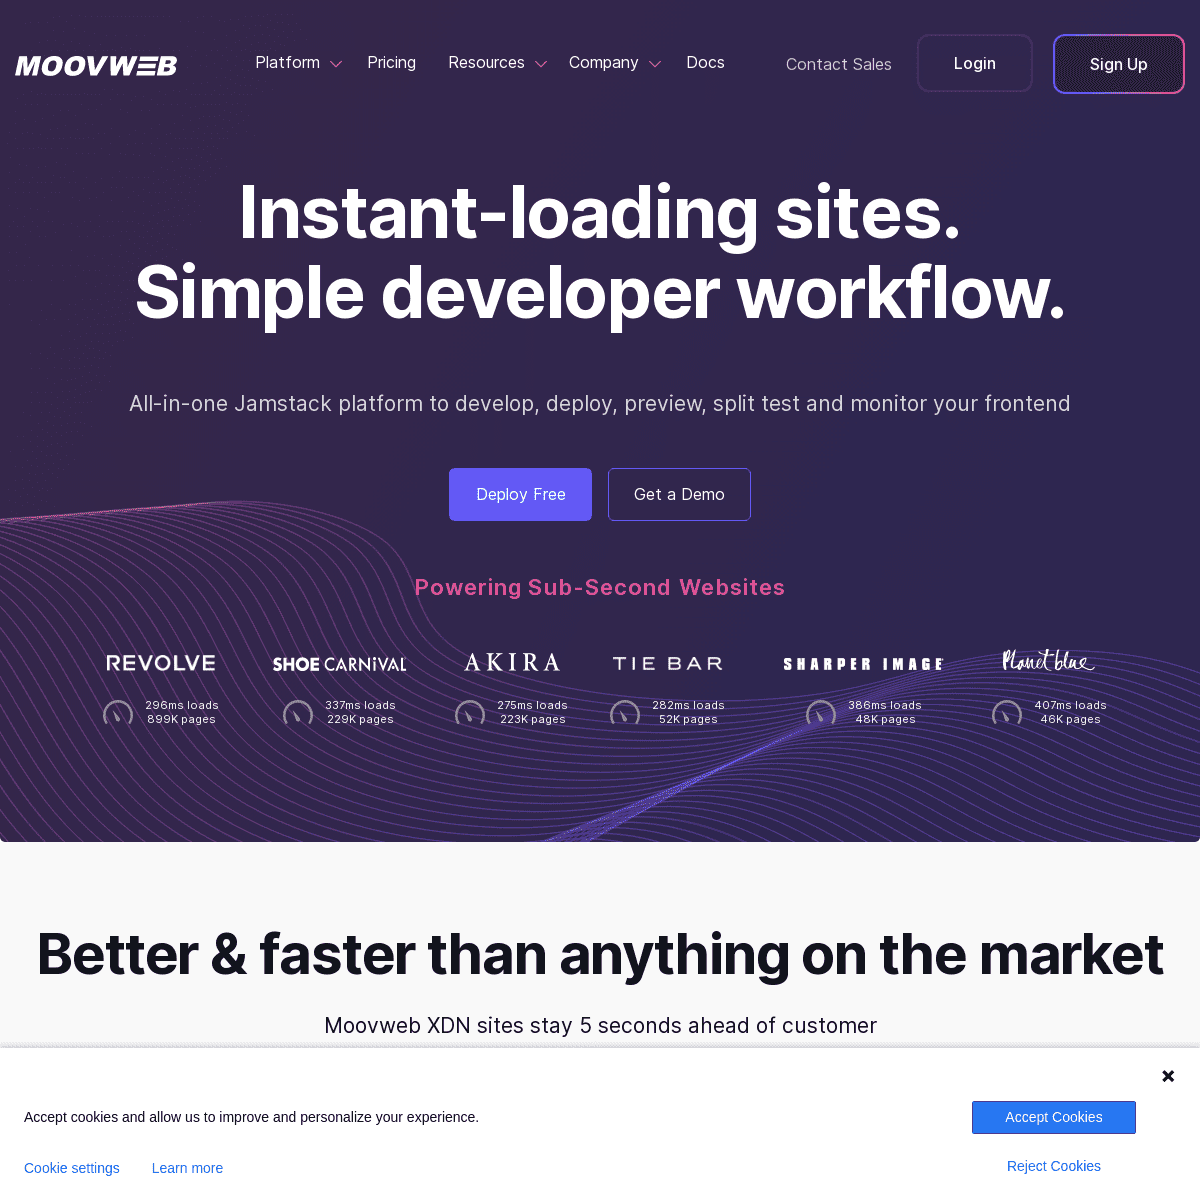 A complete backup of moovweb.com